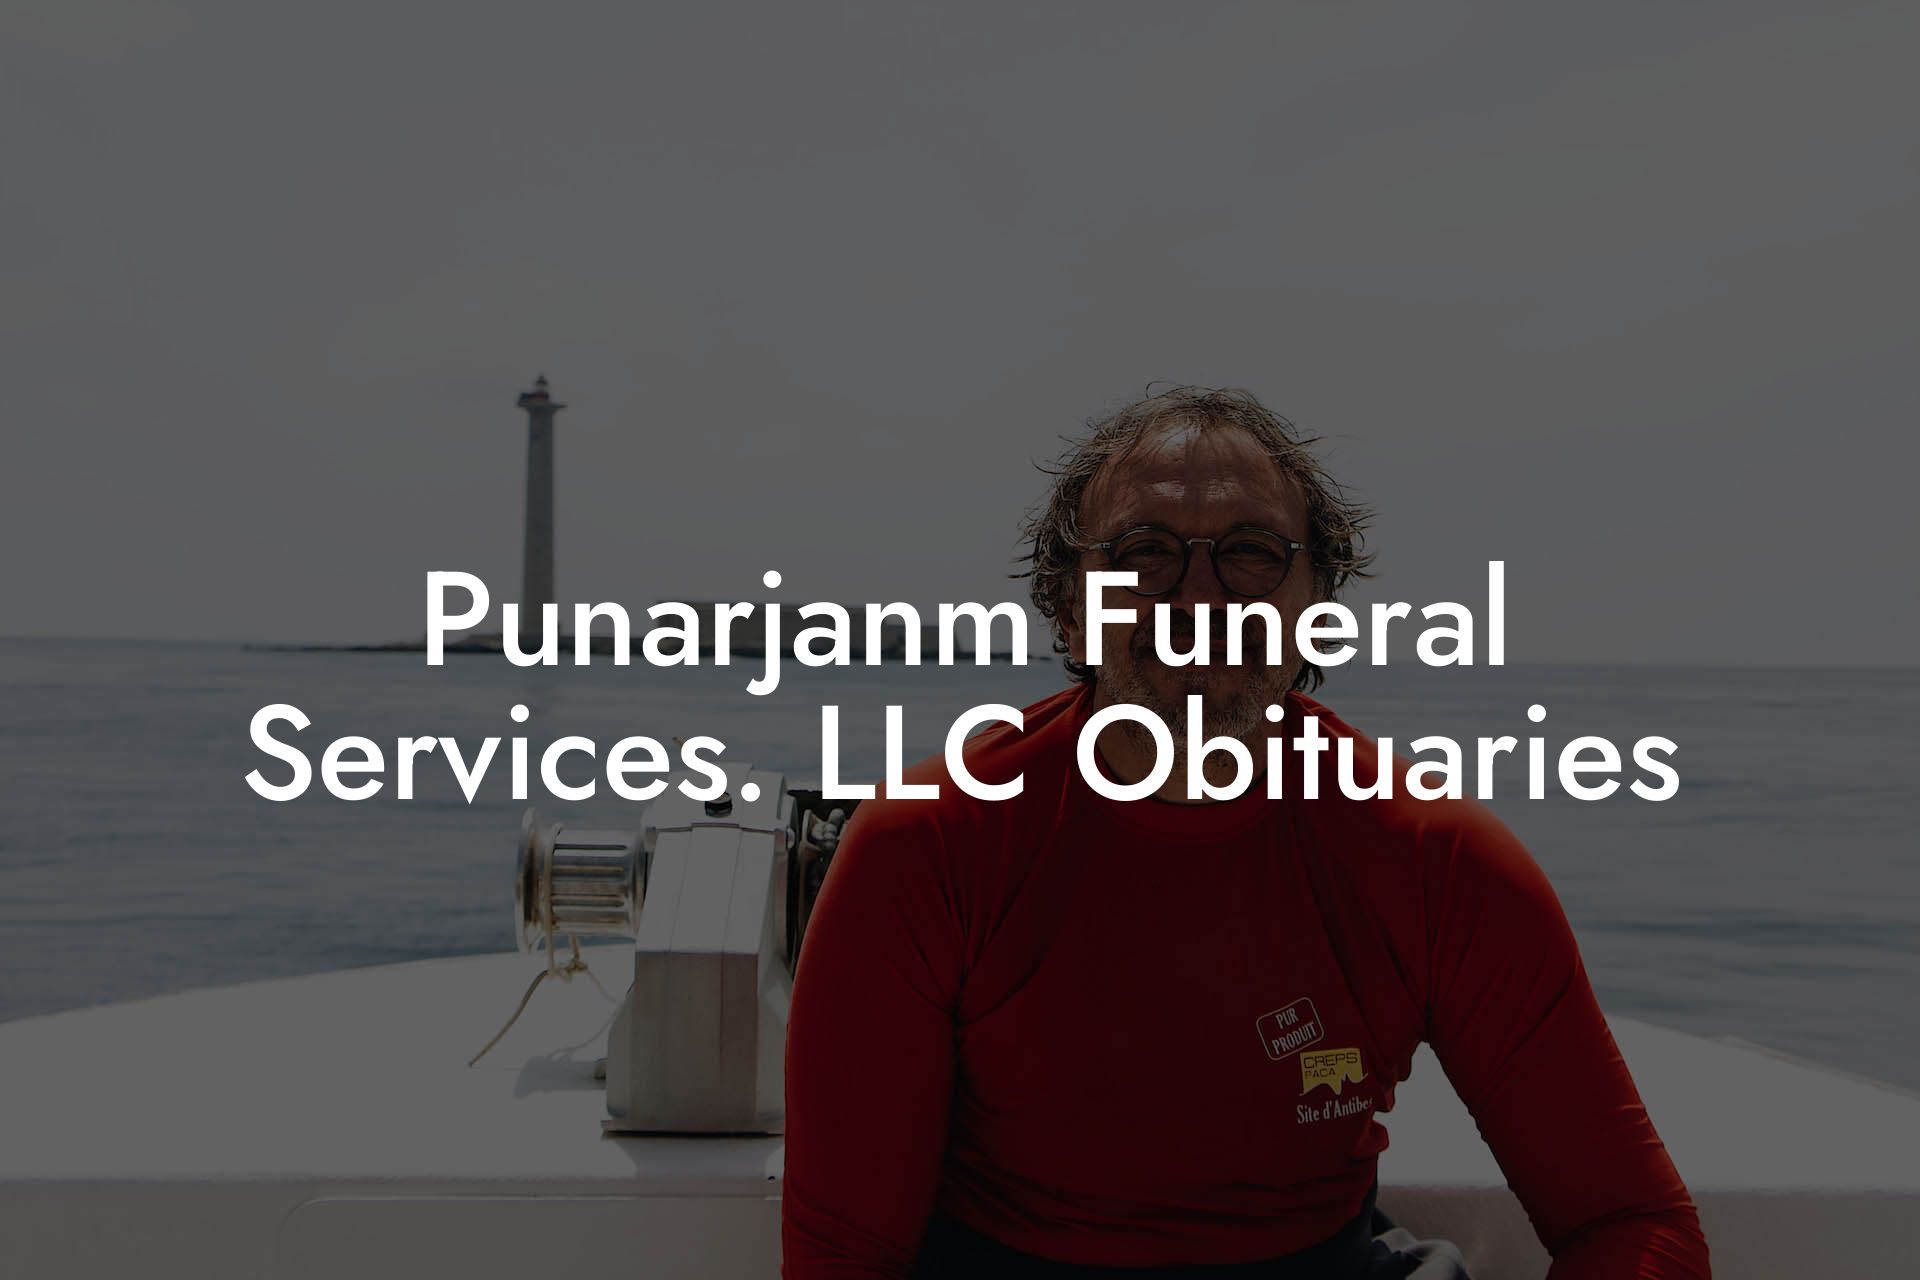 Punarjanm Funeral Services. LLC. Obituaries